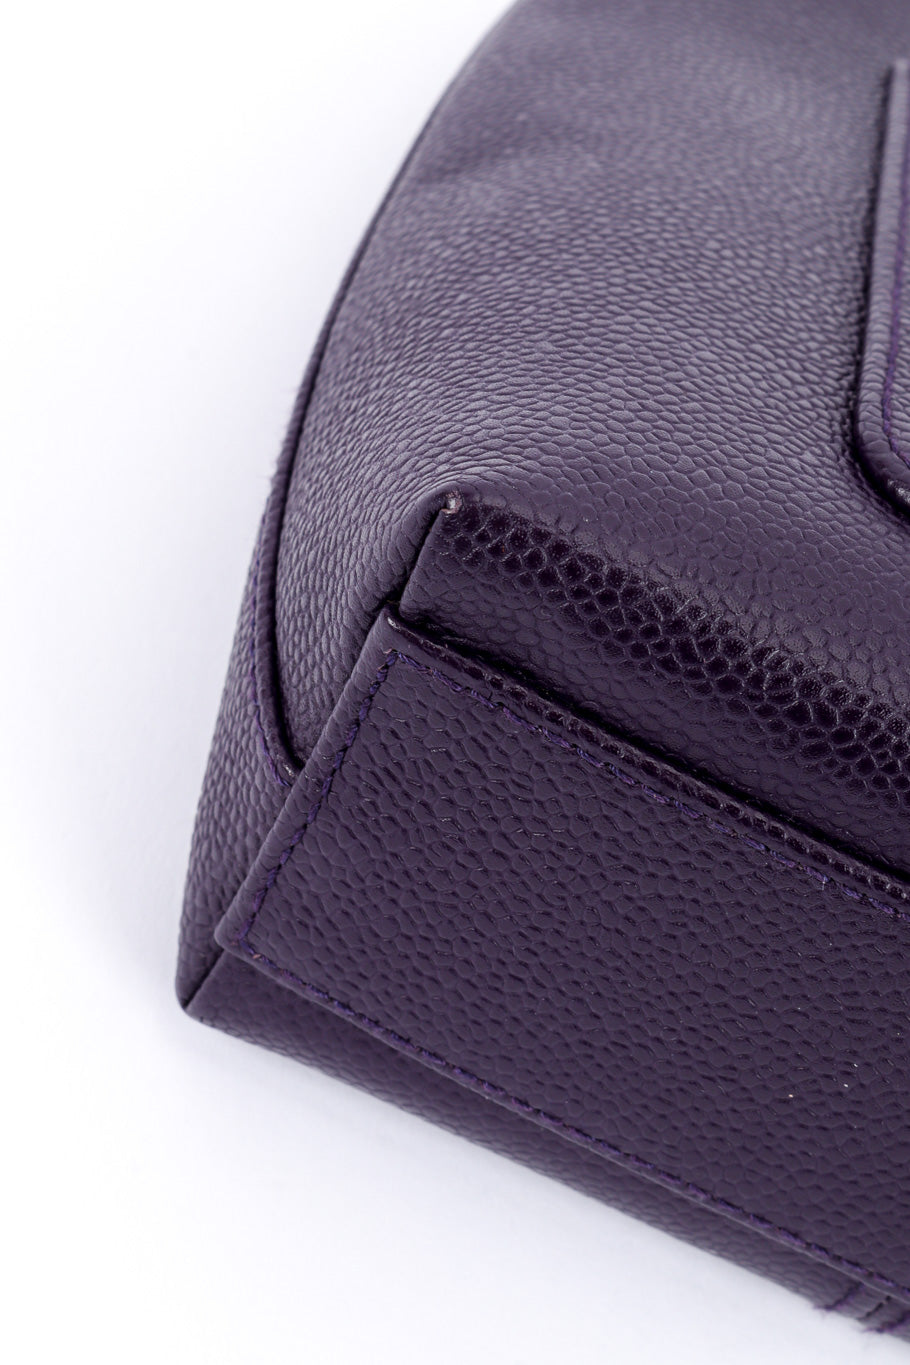 Chanel Bijoux Chain Shoulder Bag bottom closeup @recessla